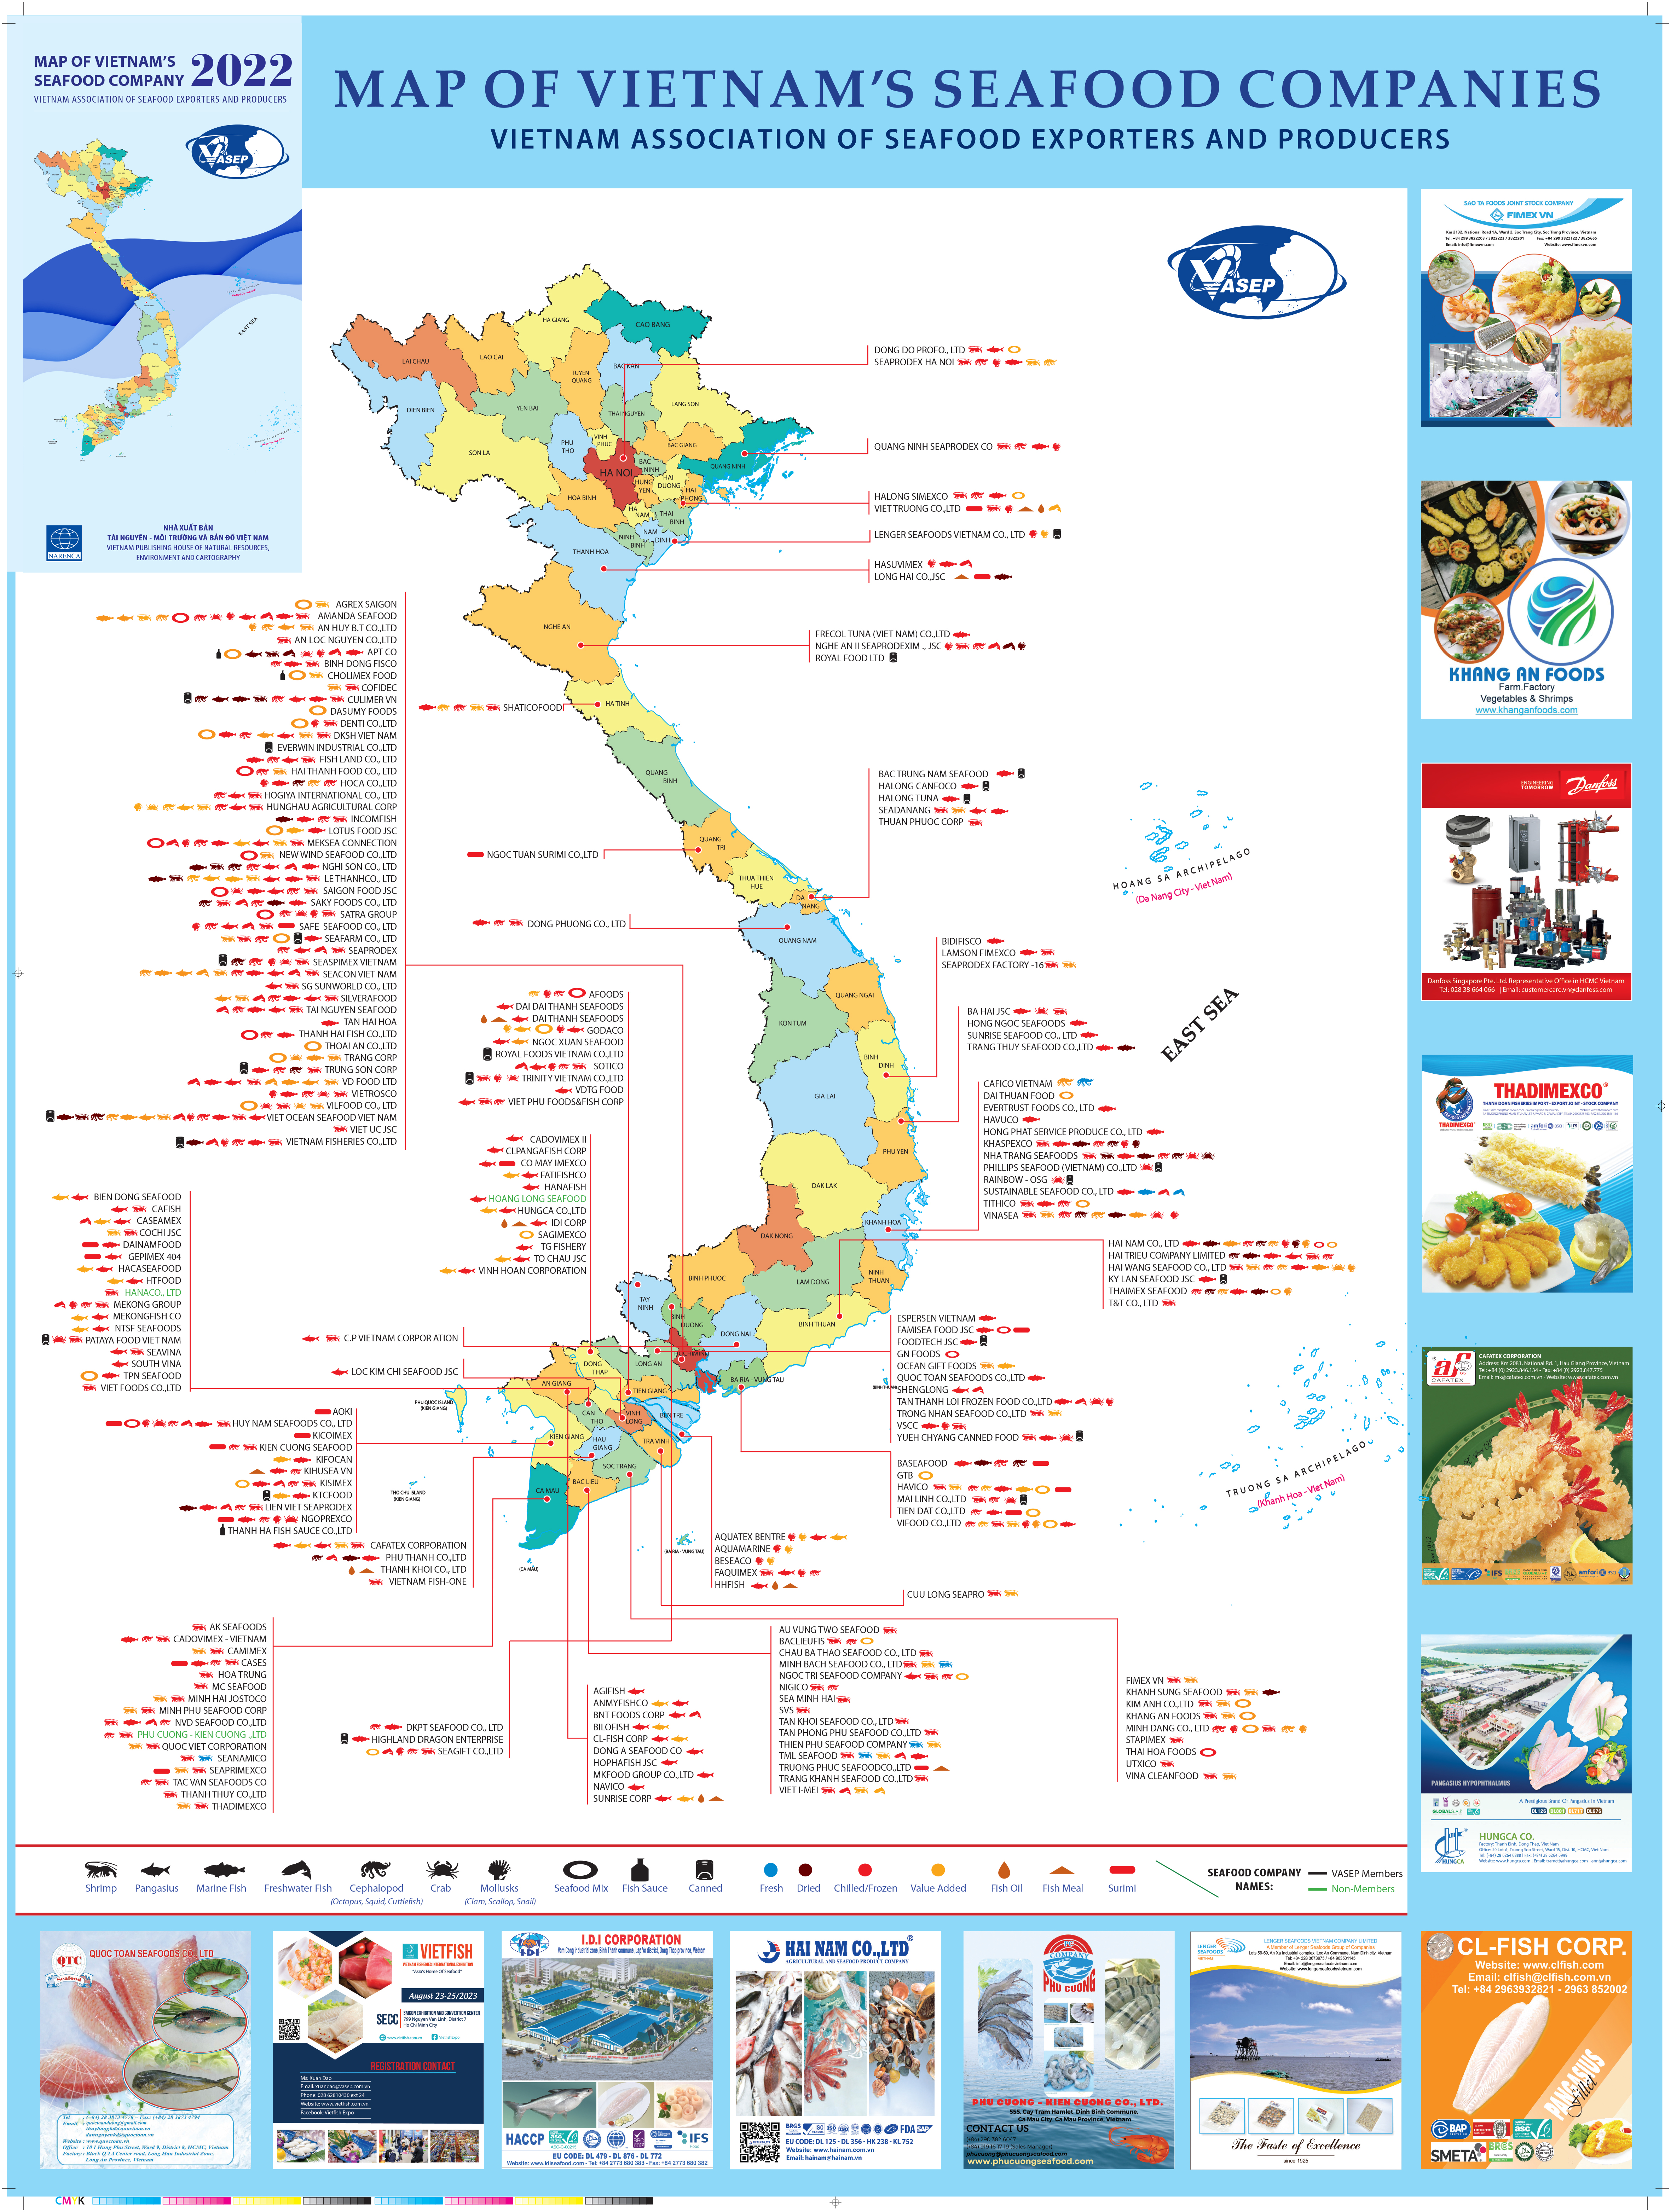 Location of Vietnam’s seafood companies